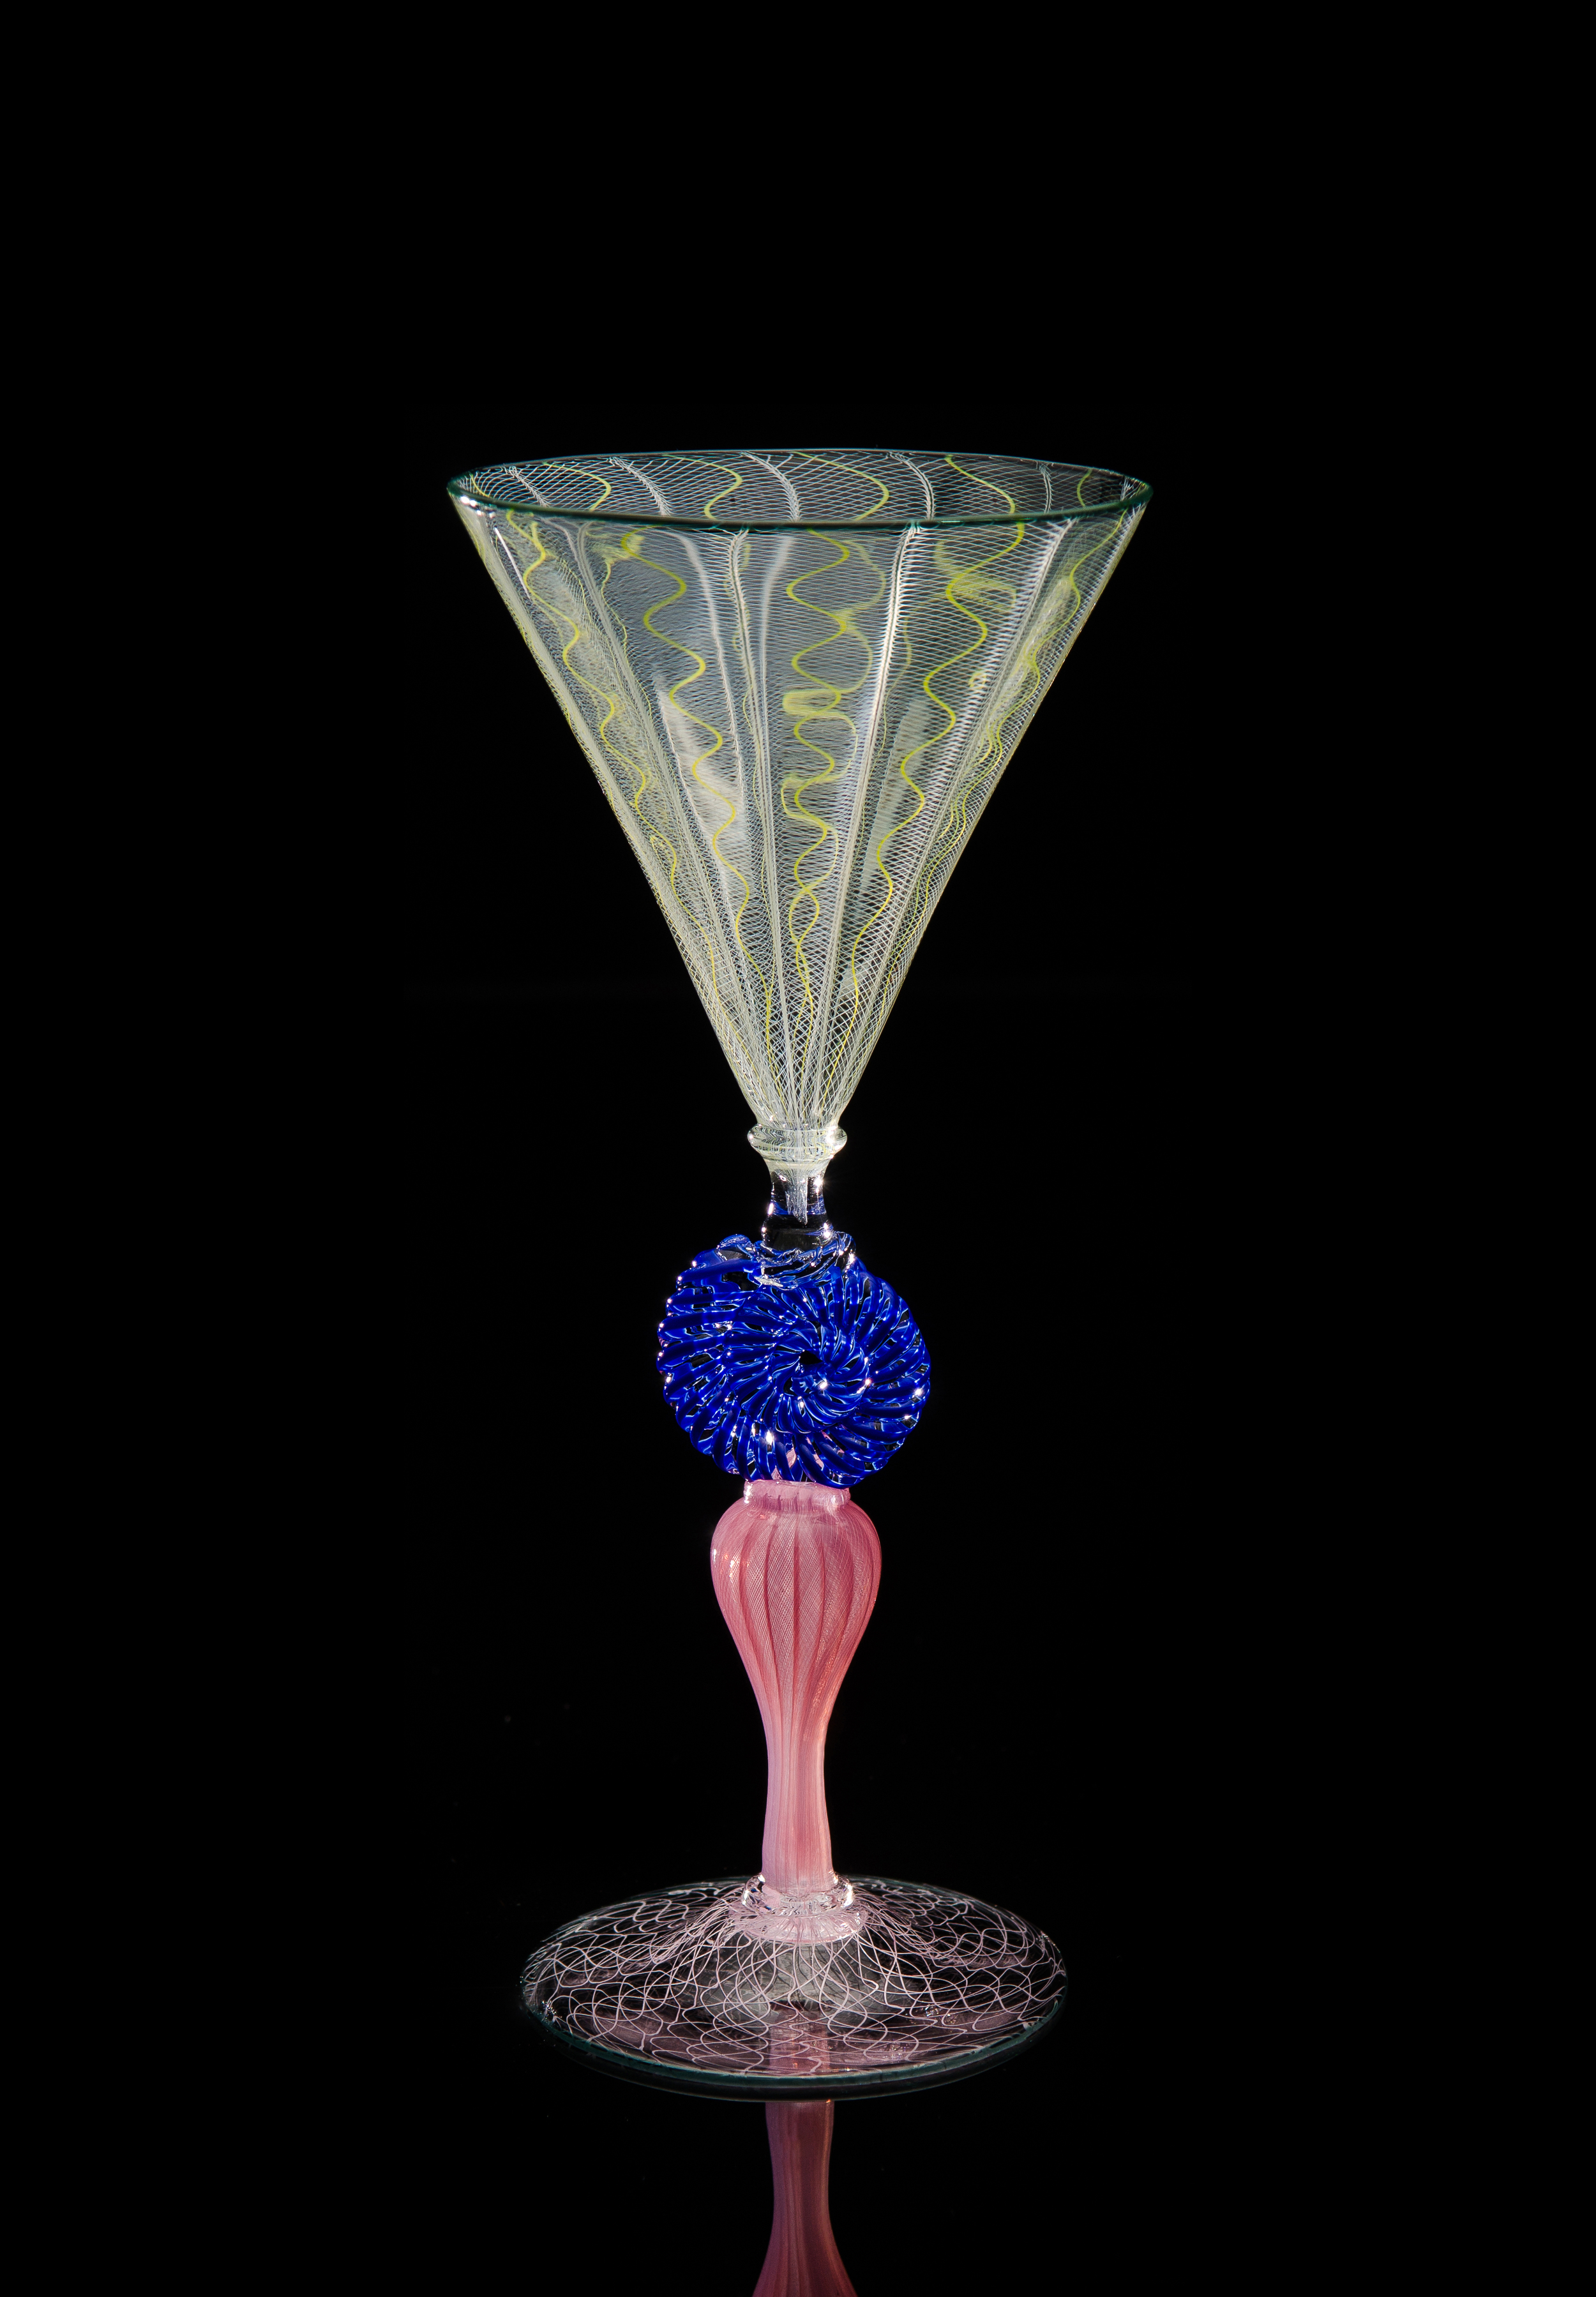  Lino Tagliapietra,&nbsp; Goblet&nbsp; (1991-1994, glass, 9 1/4 x 4 3/16 x 4 3/16 inches), LT.17 